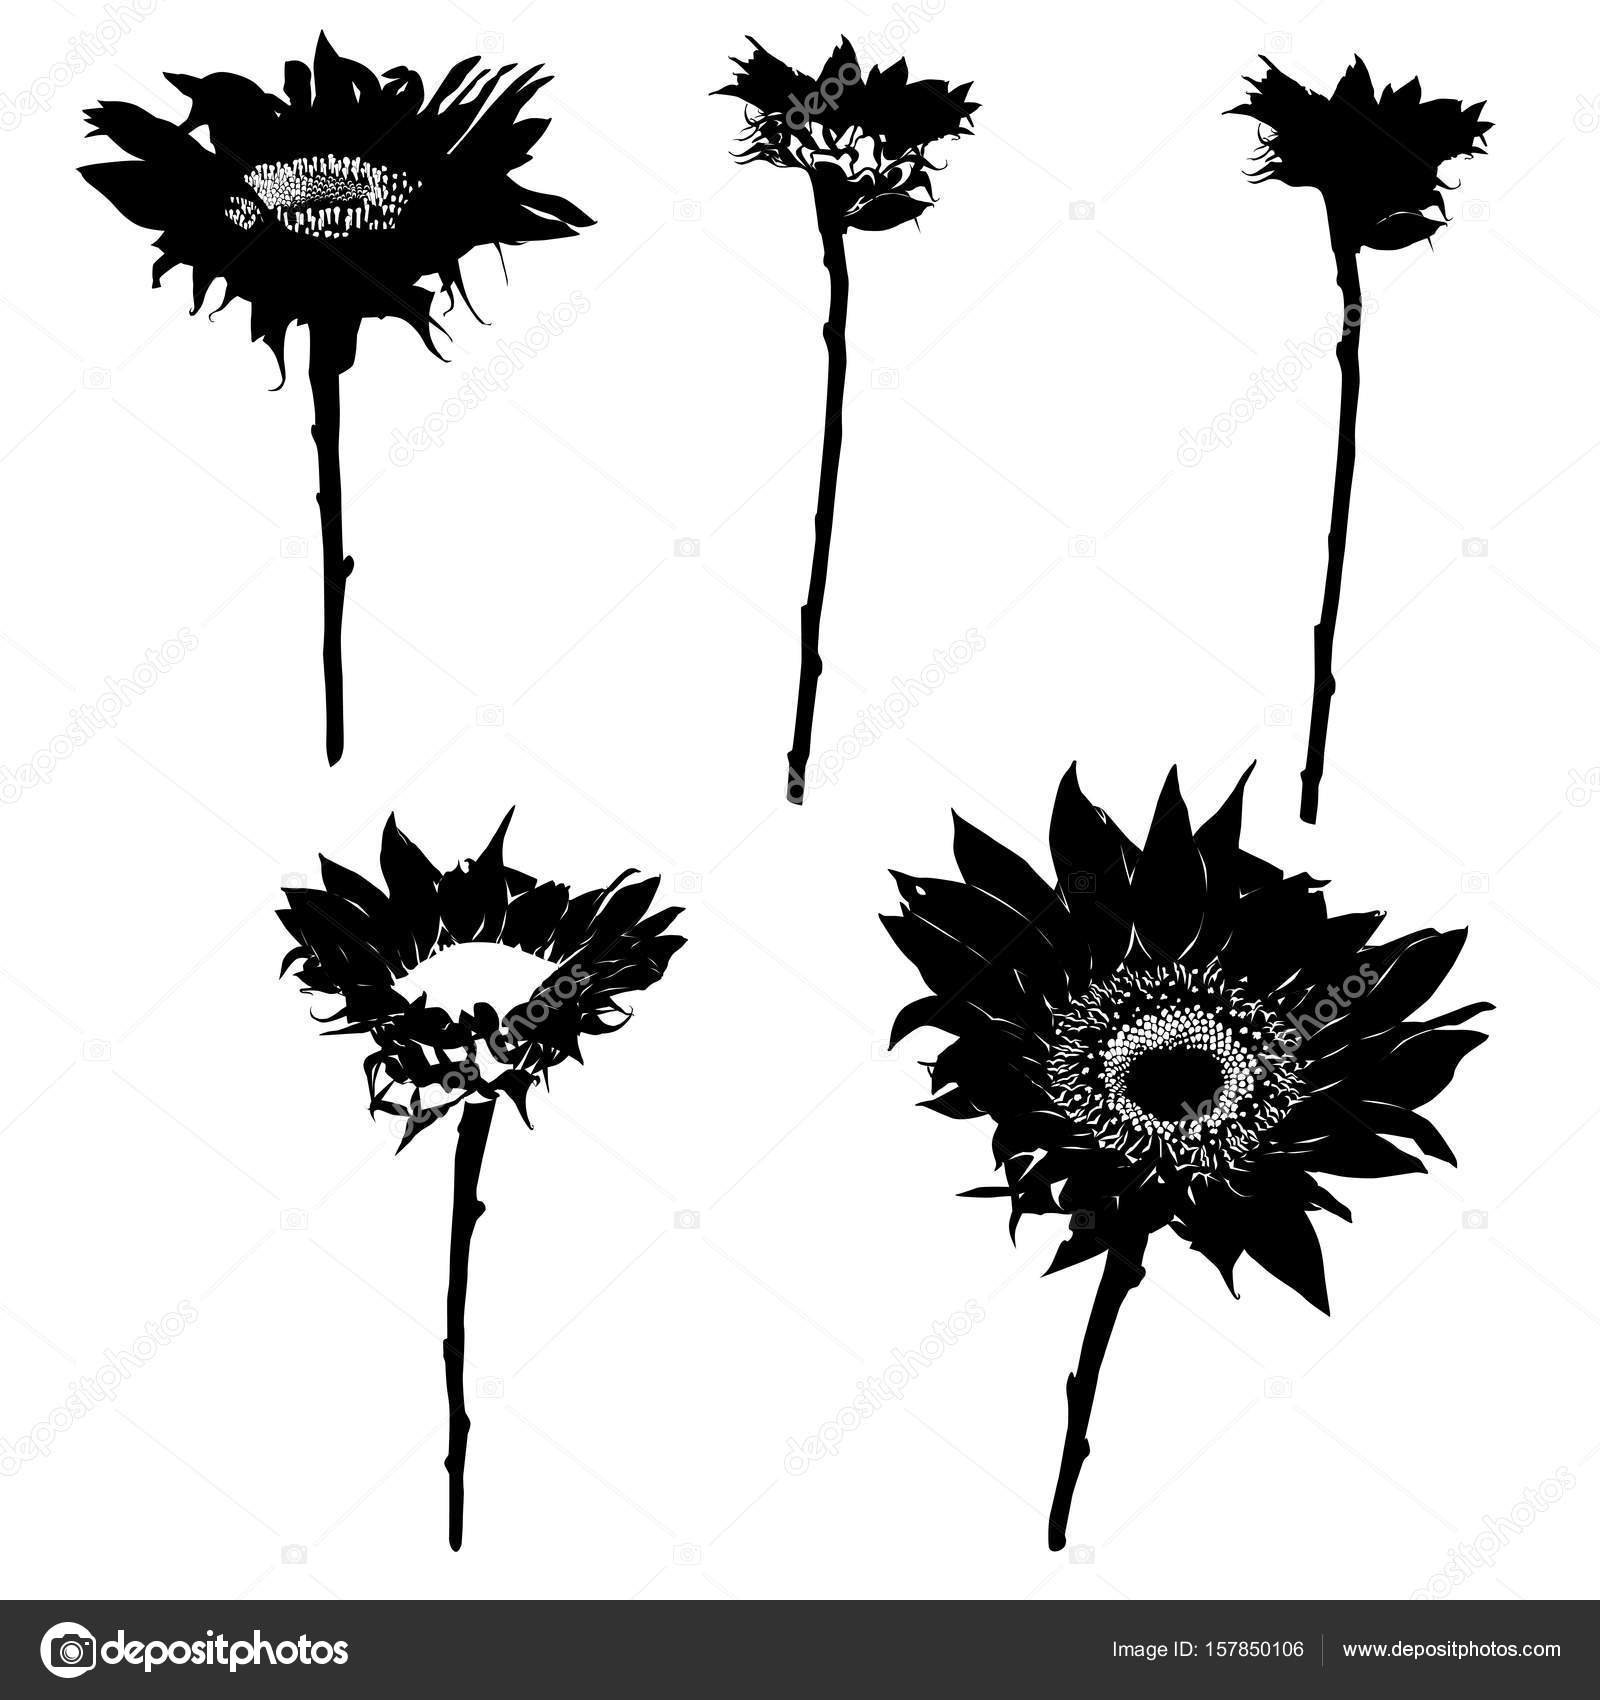 Sunflower silhouettes photo